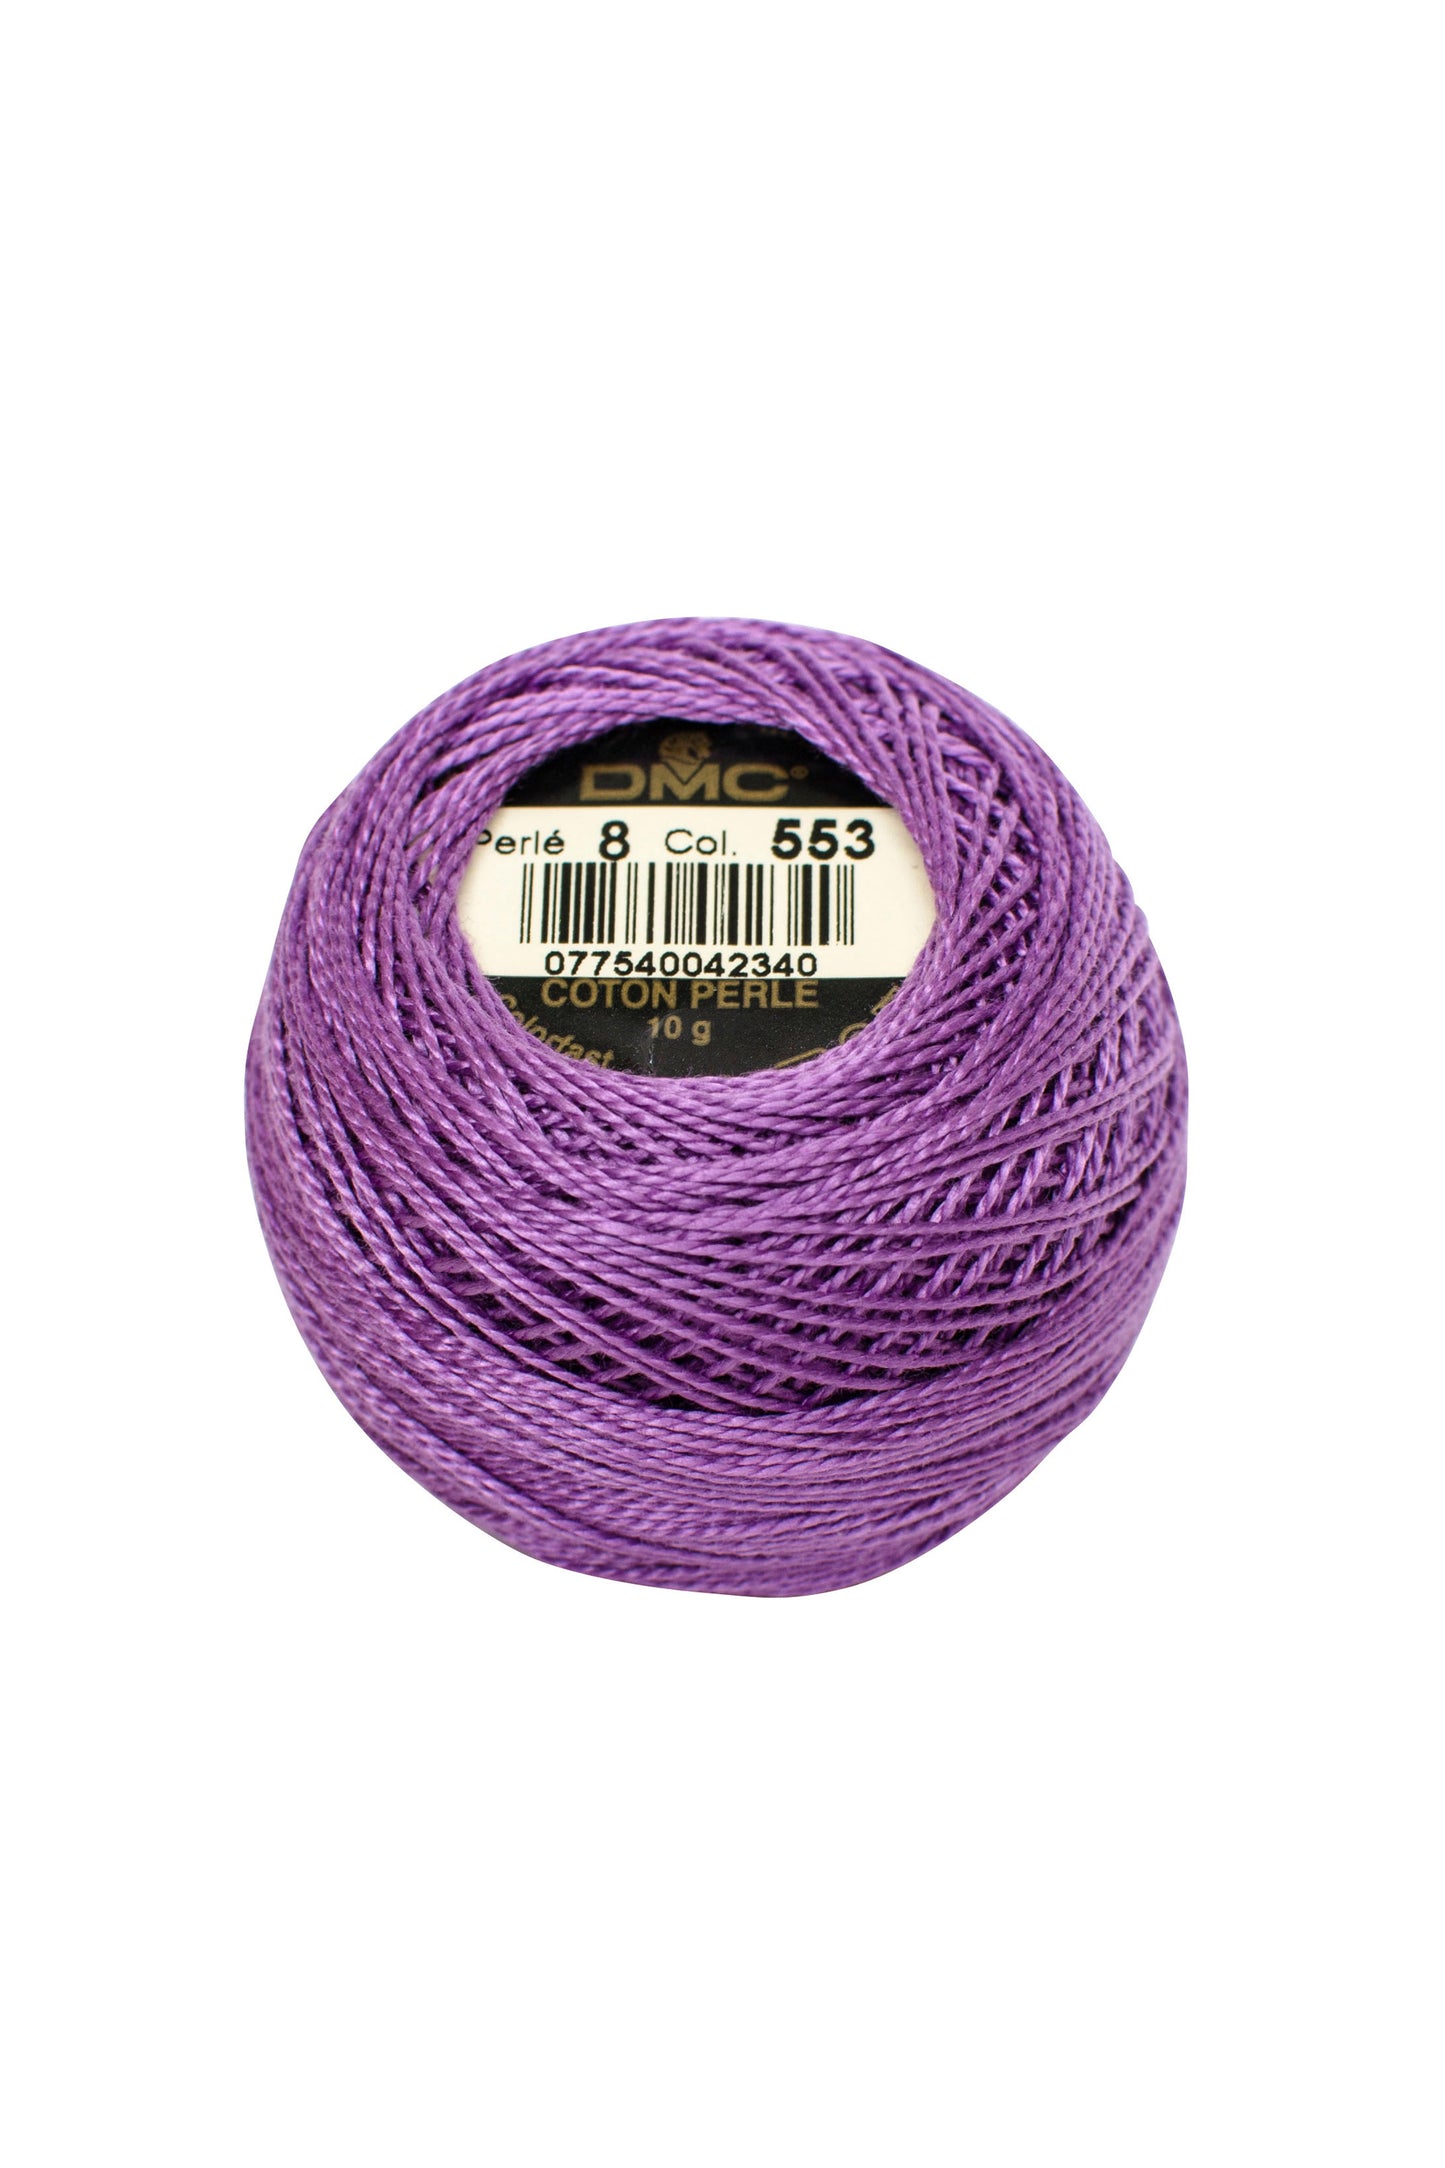 553 Light Violet - DMC #5 Perle Cotton Ball